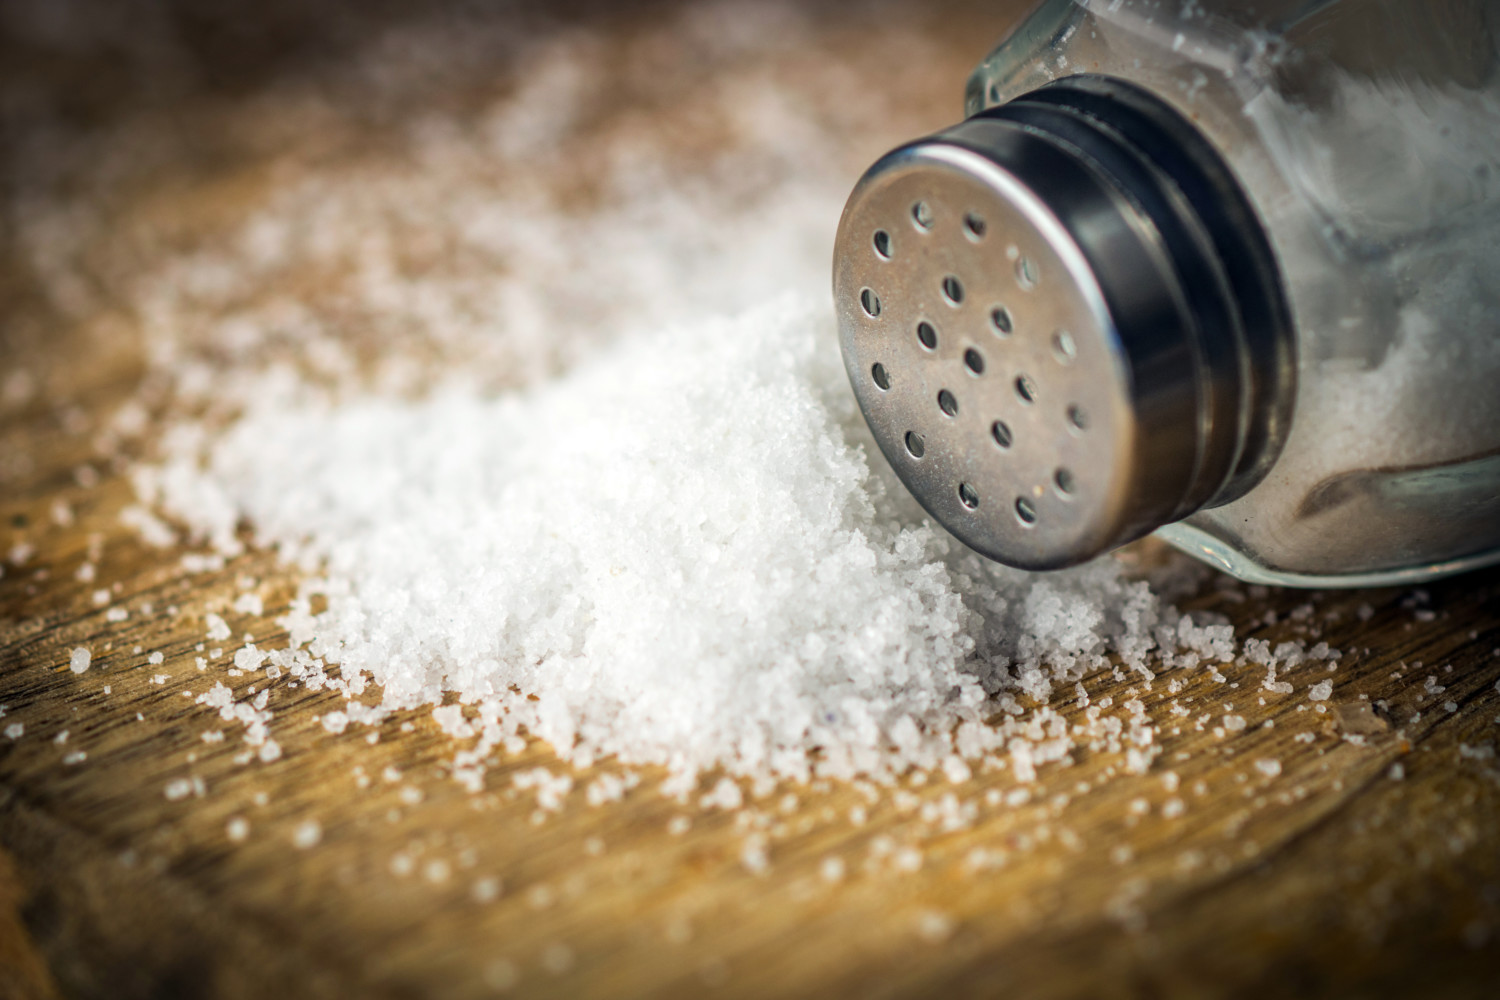 FDA advises restaurants to cut back on salt usage